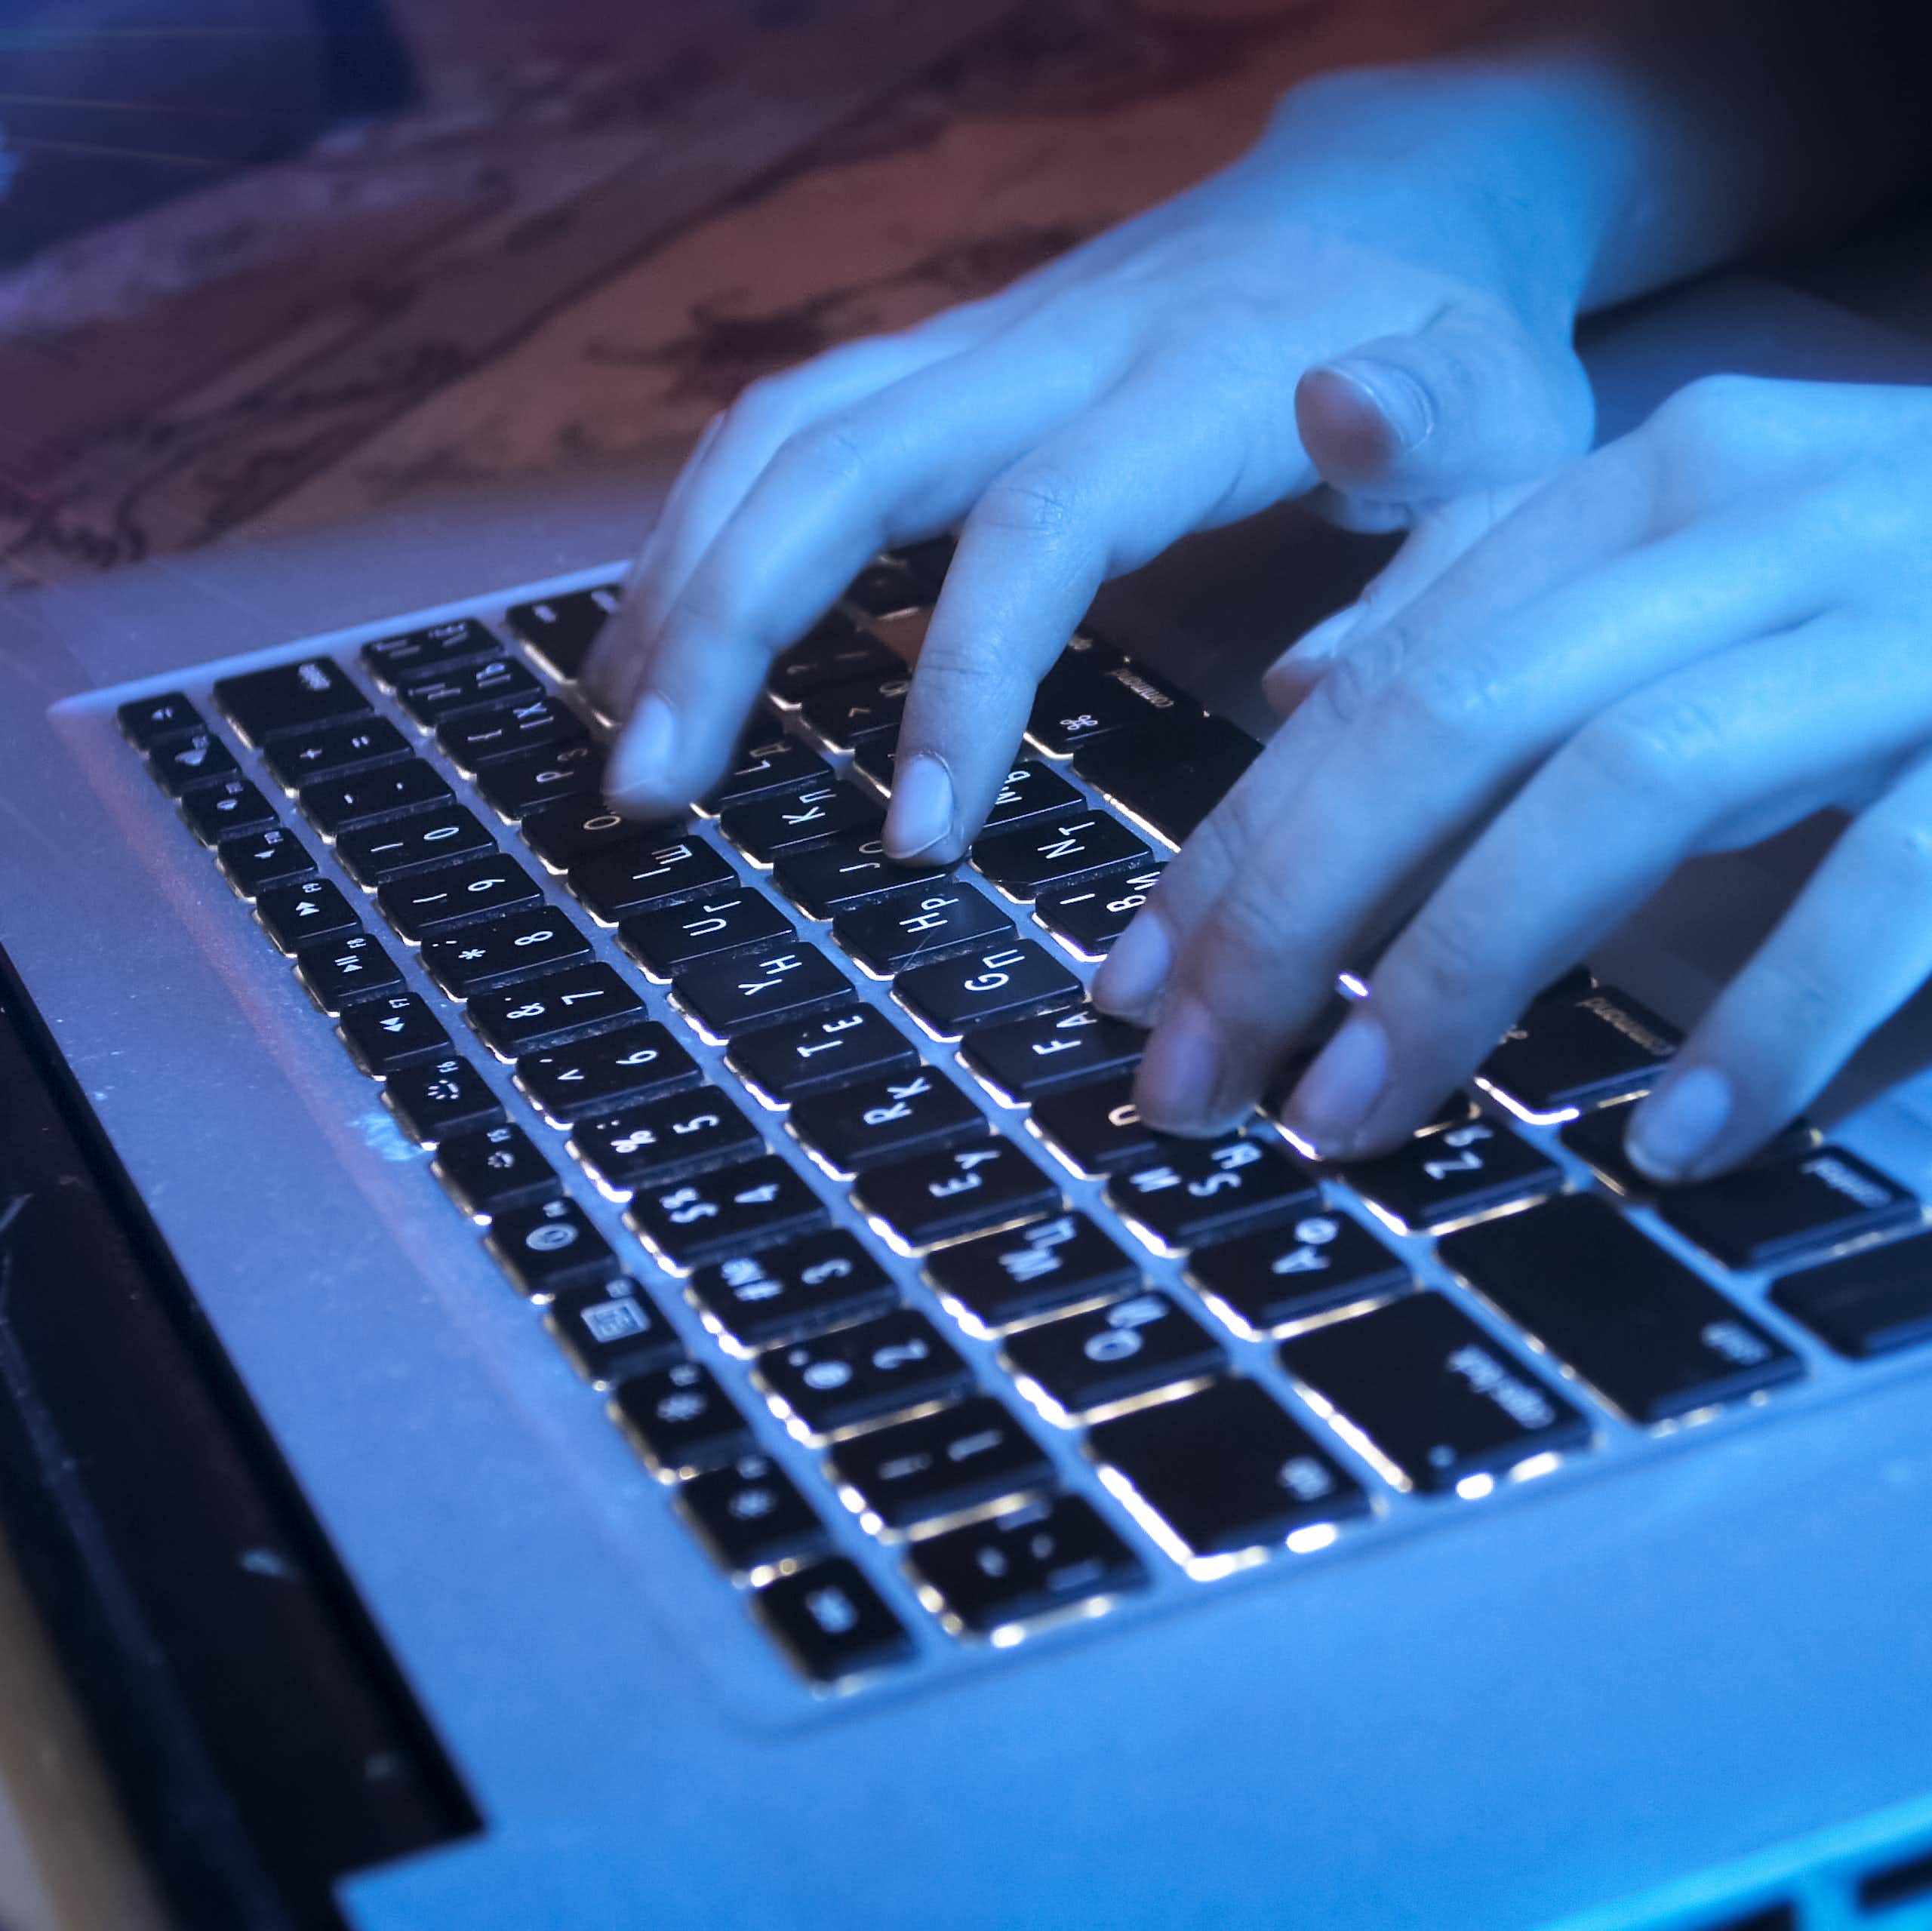 Hands seen at a keyboard.